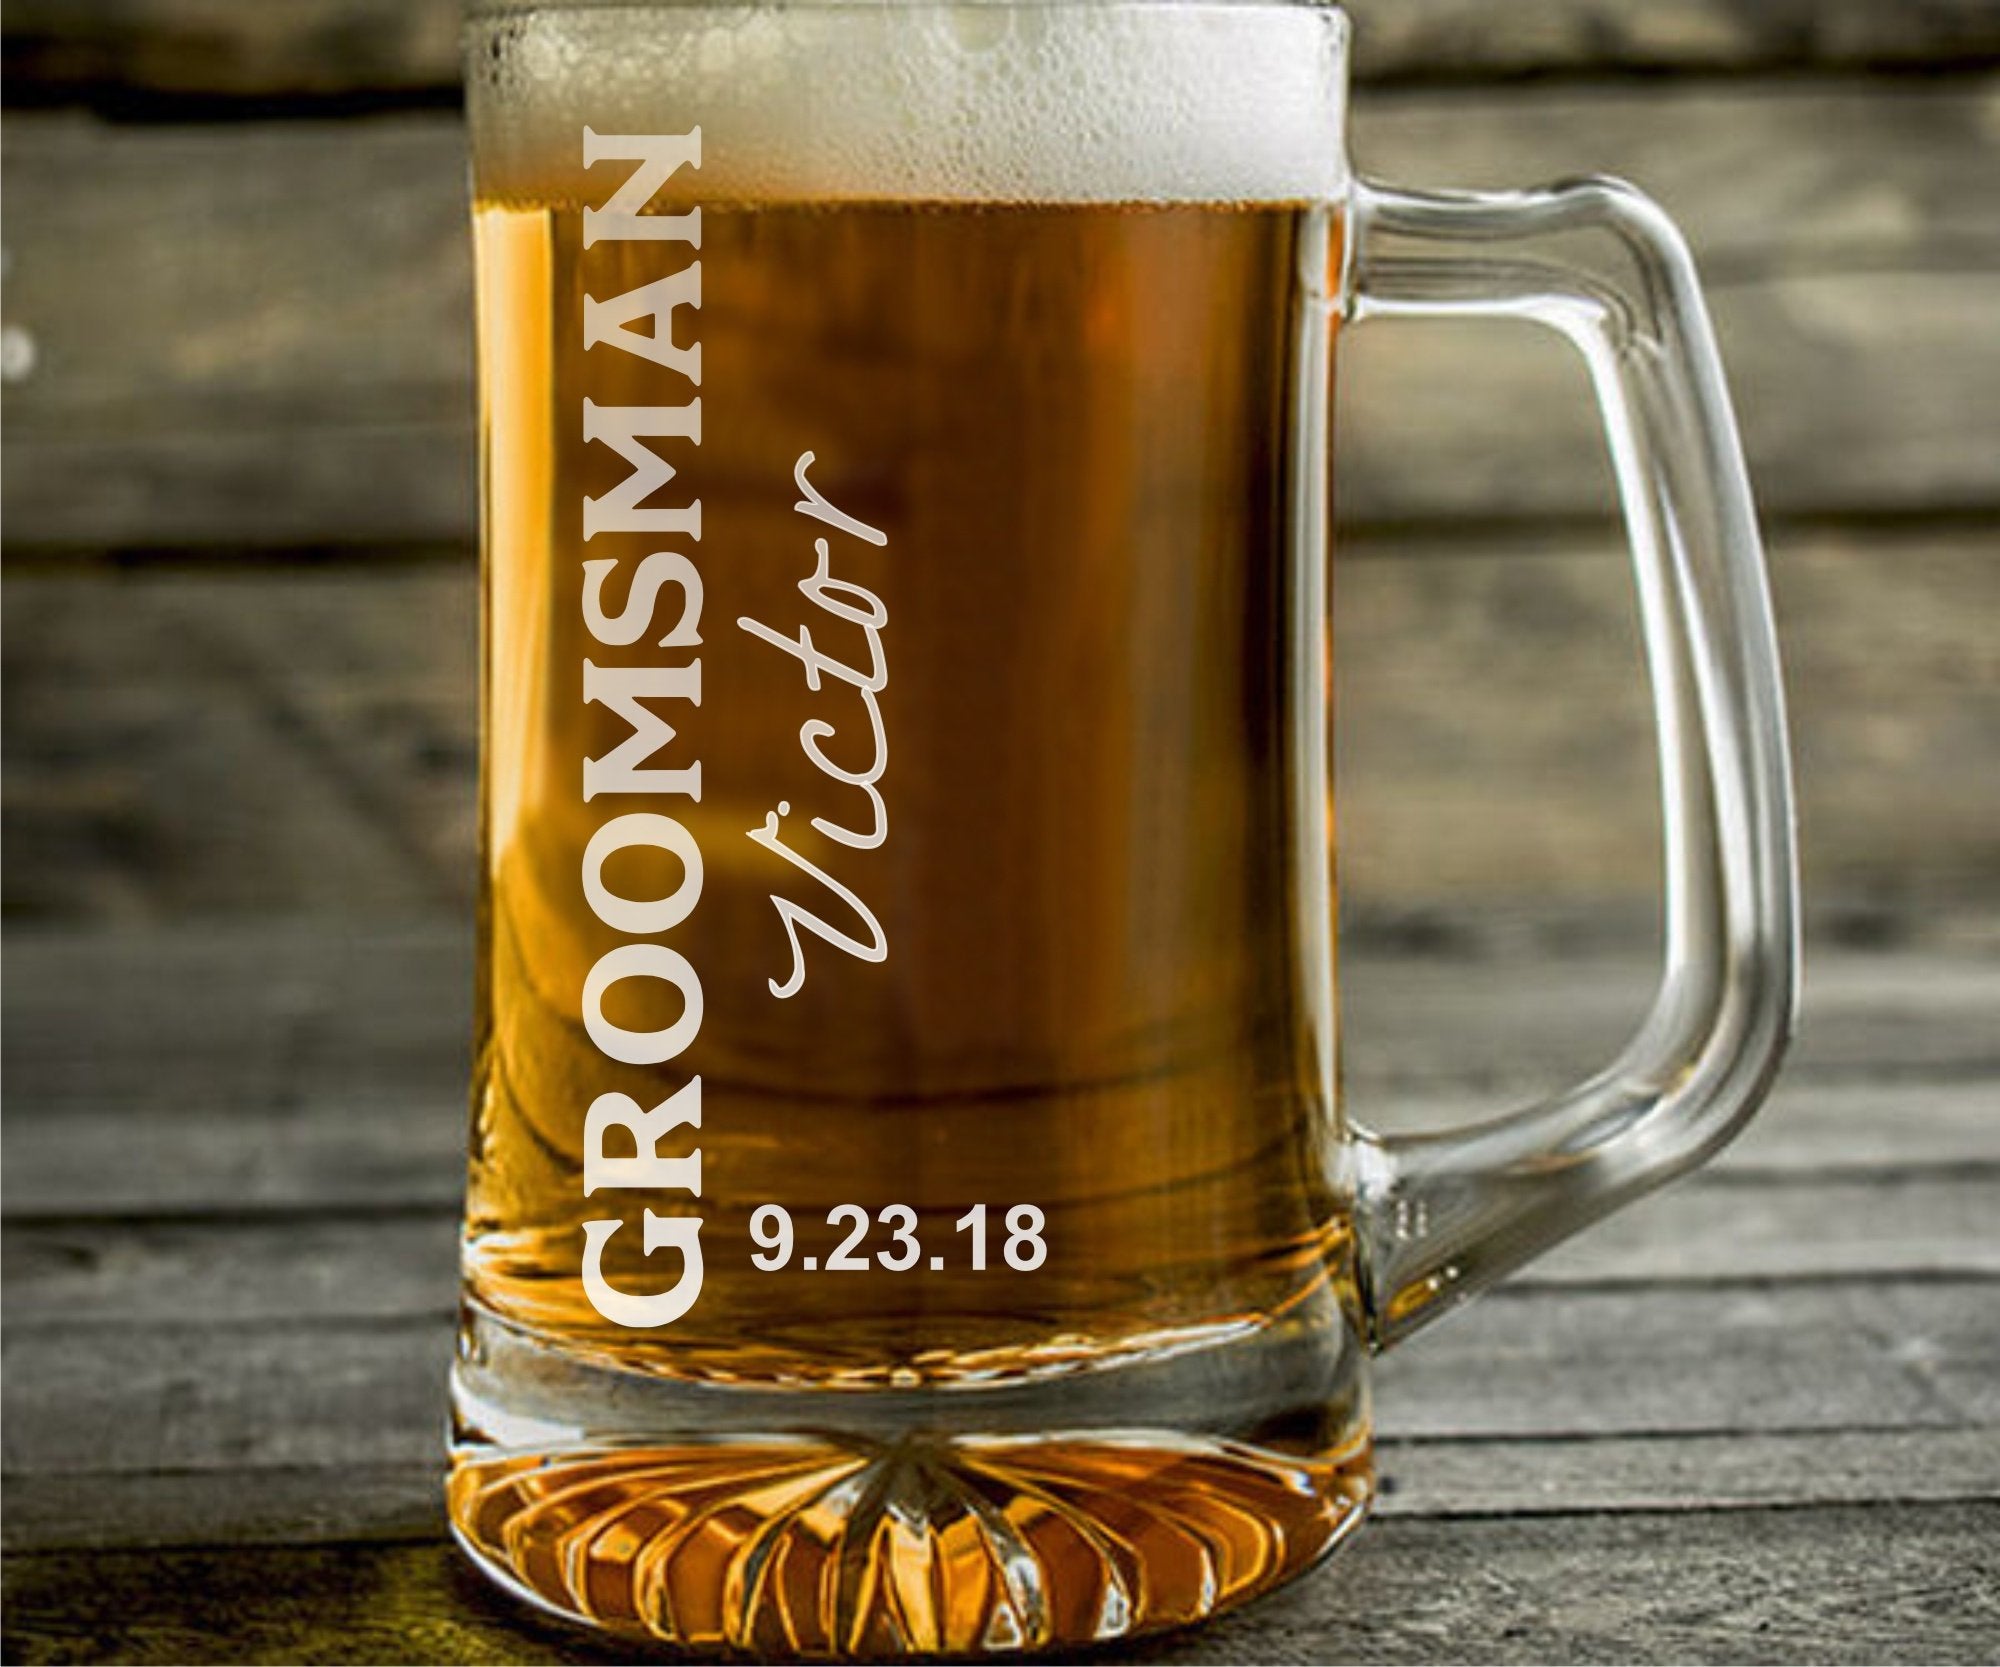 Personalized Beer Mugs, Engraved Beer Glasses